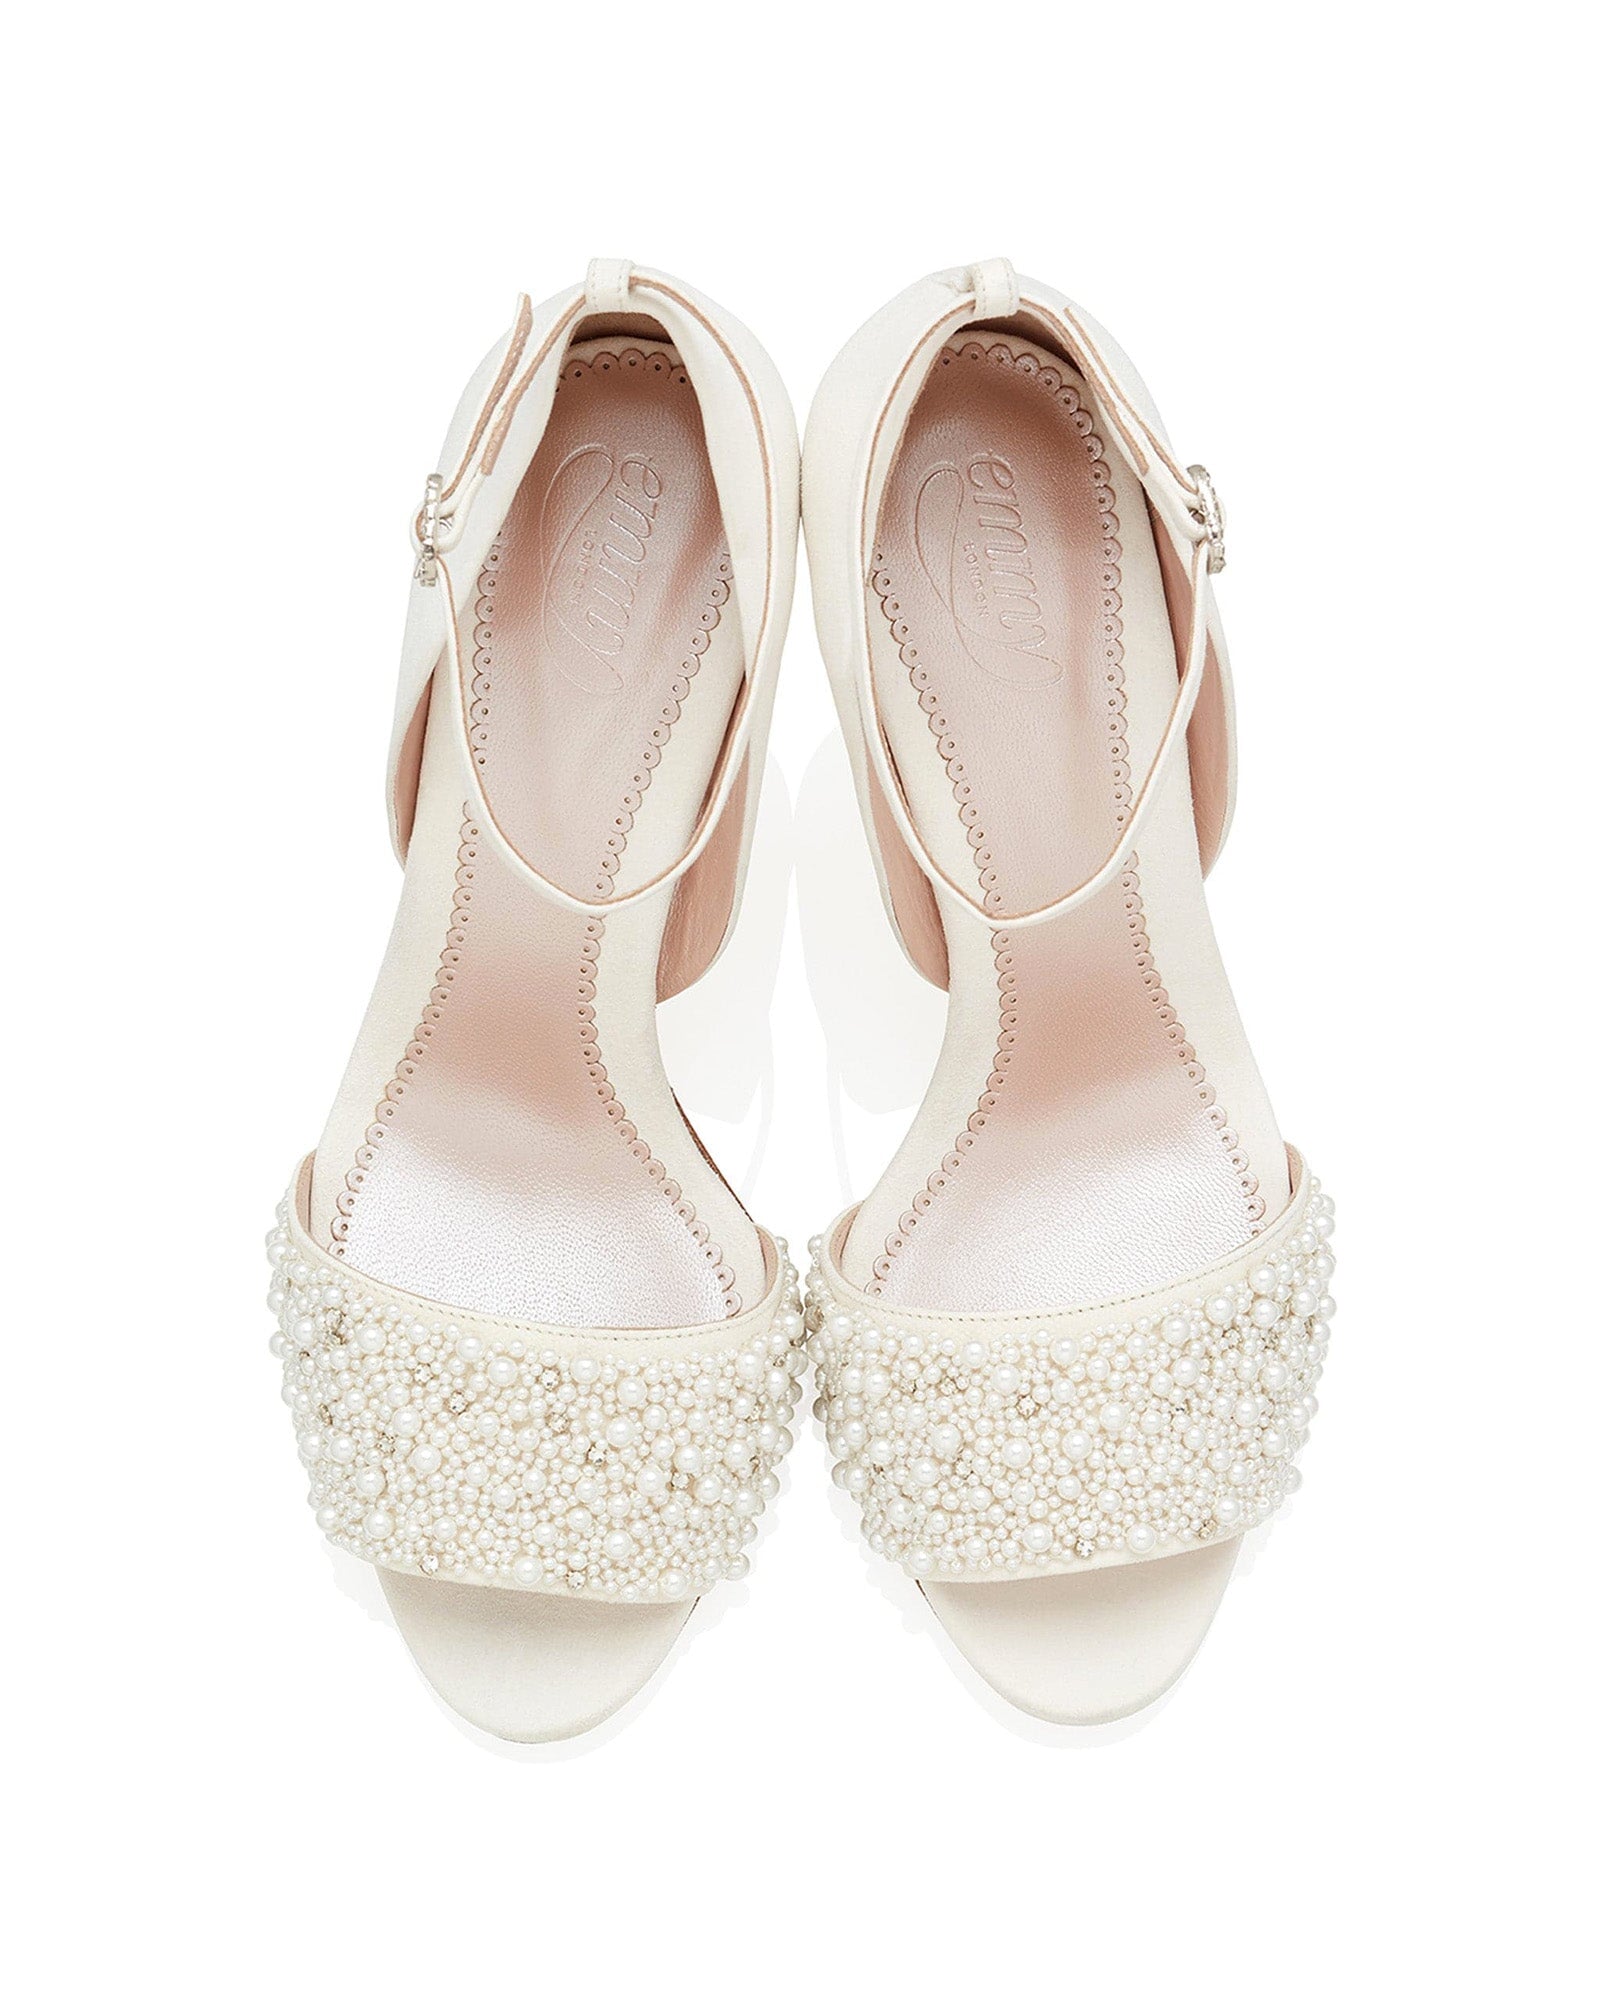 Daisy Oyster Pearl Bridal Shoe Ivory Overlay Bridal Shoes  image